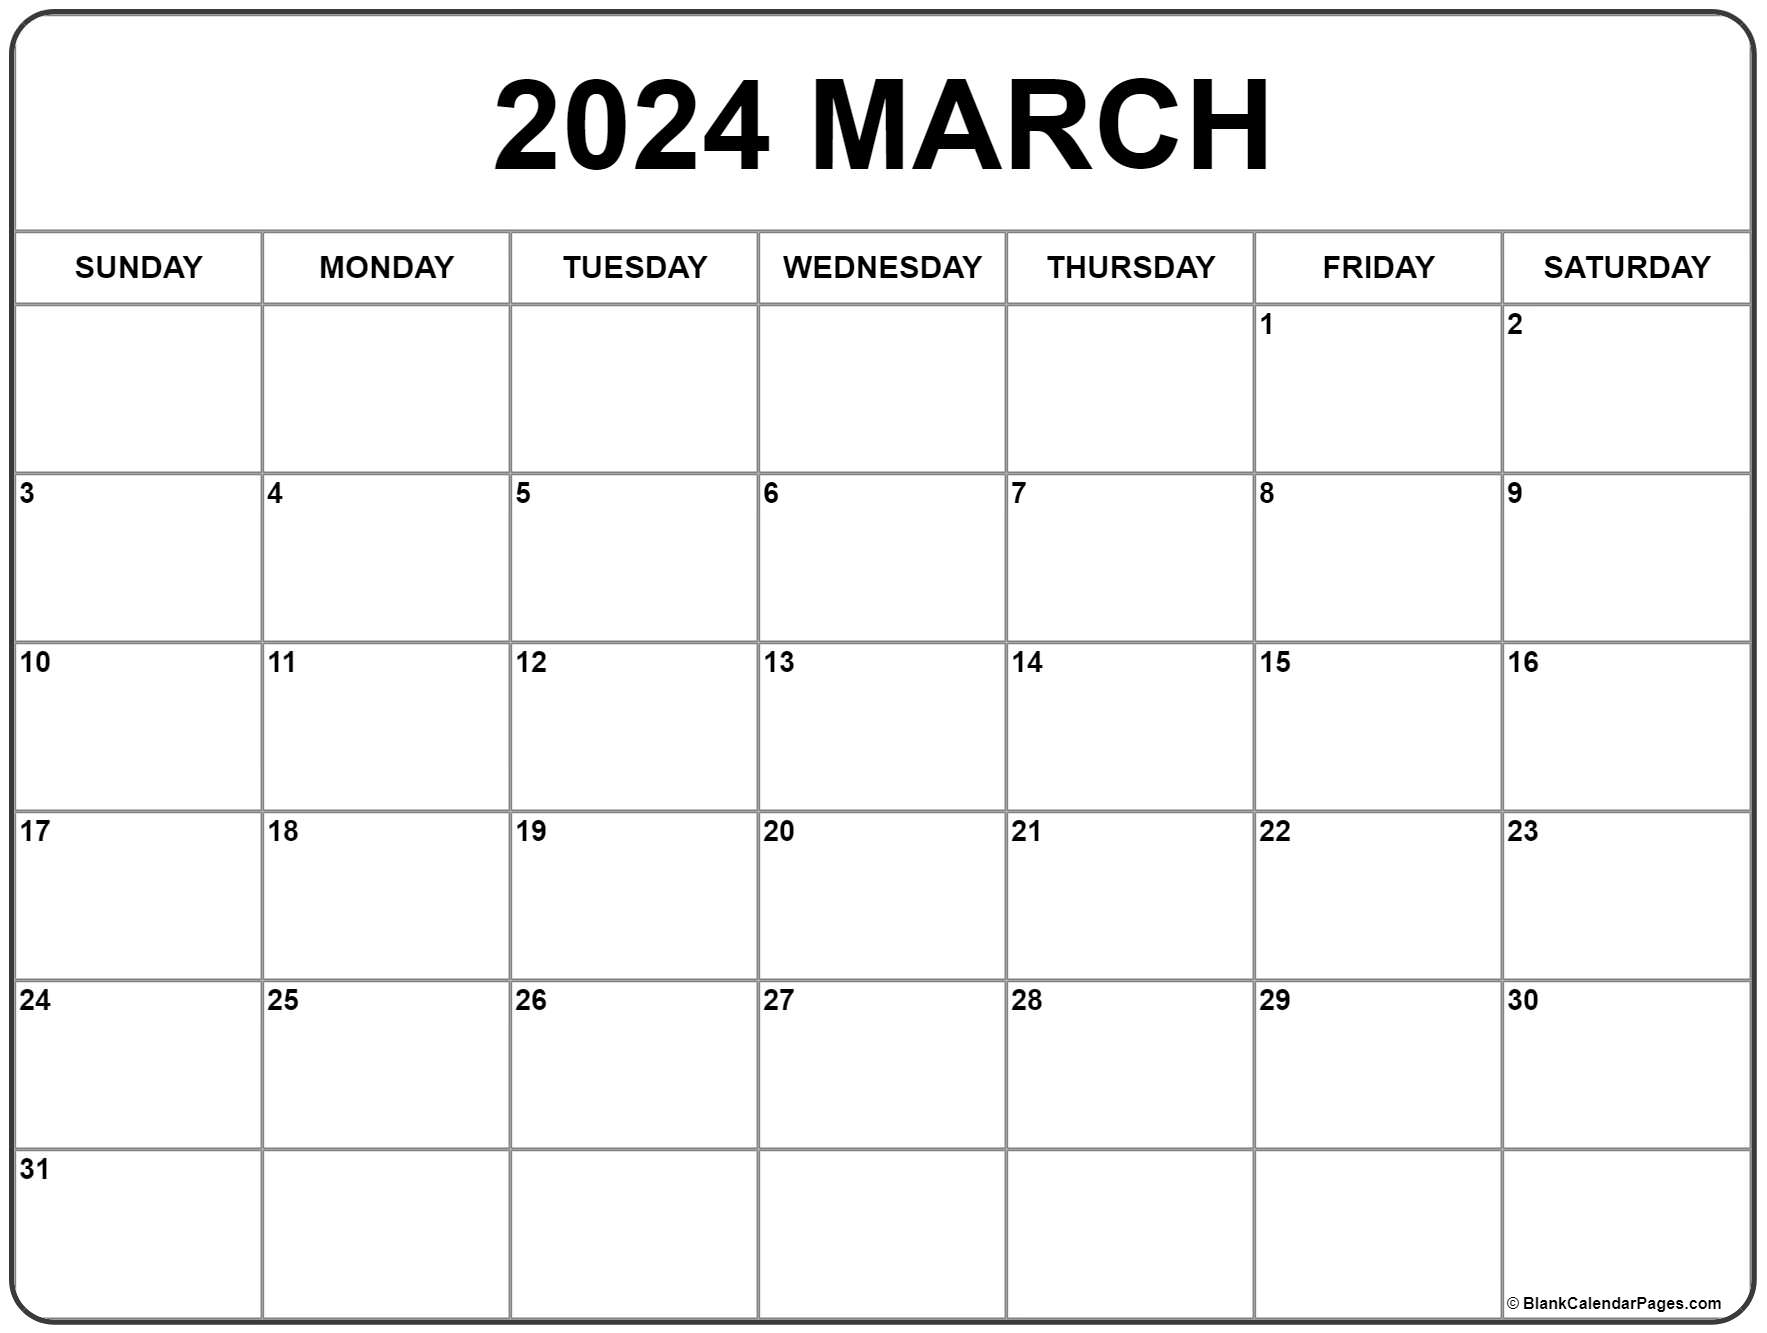 March 2024 Calendar | Free Printable Calendar for Blank March 2024 Calendar Free Printable